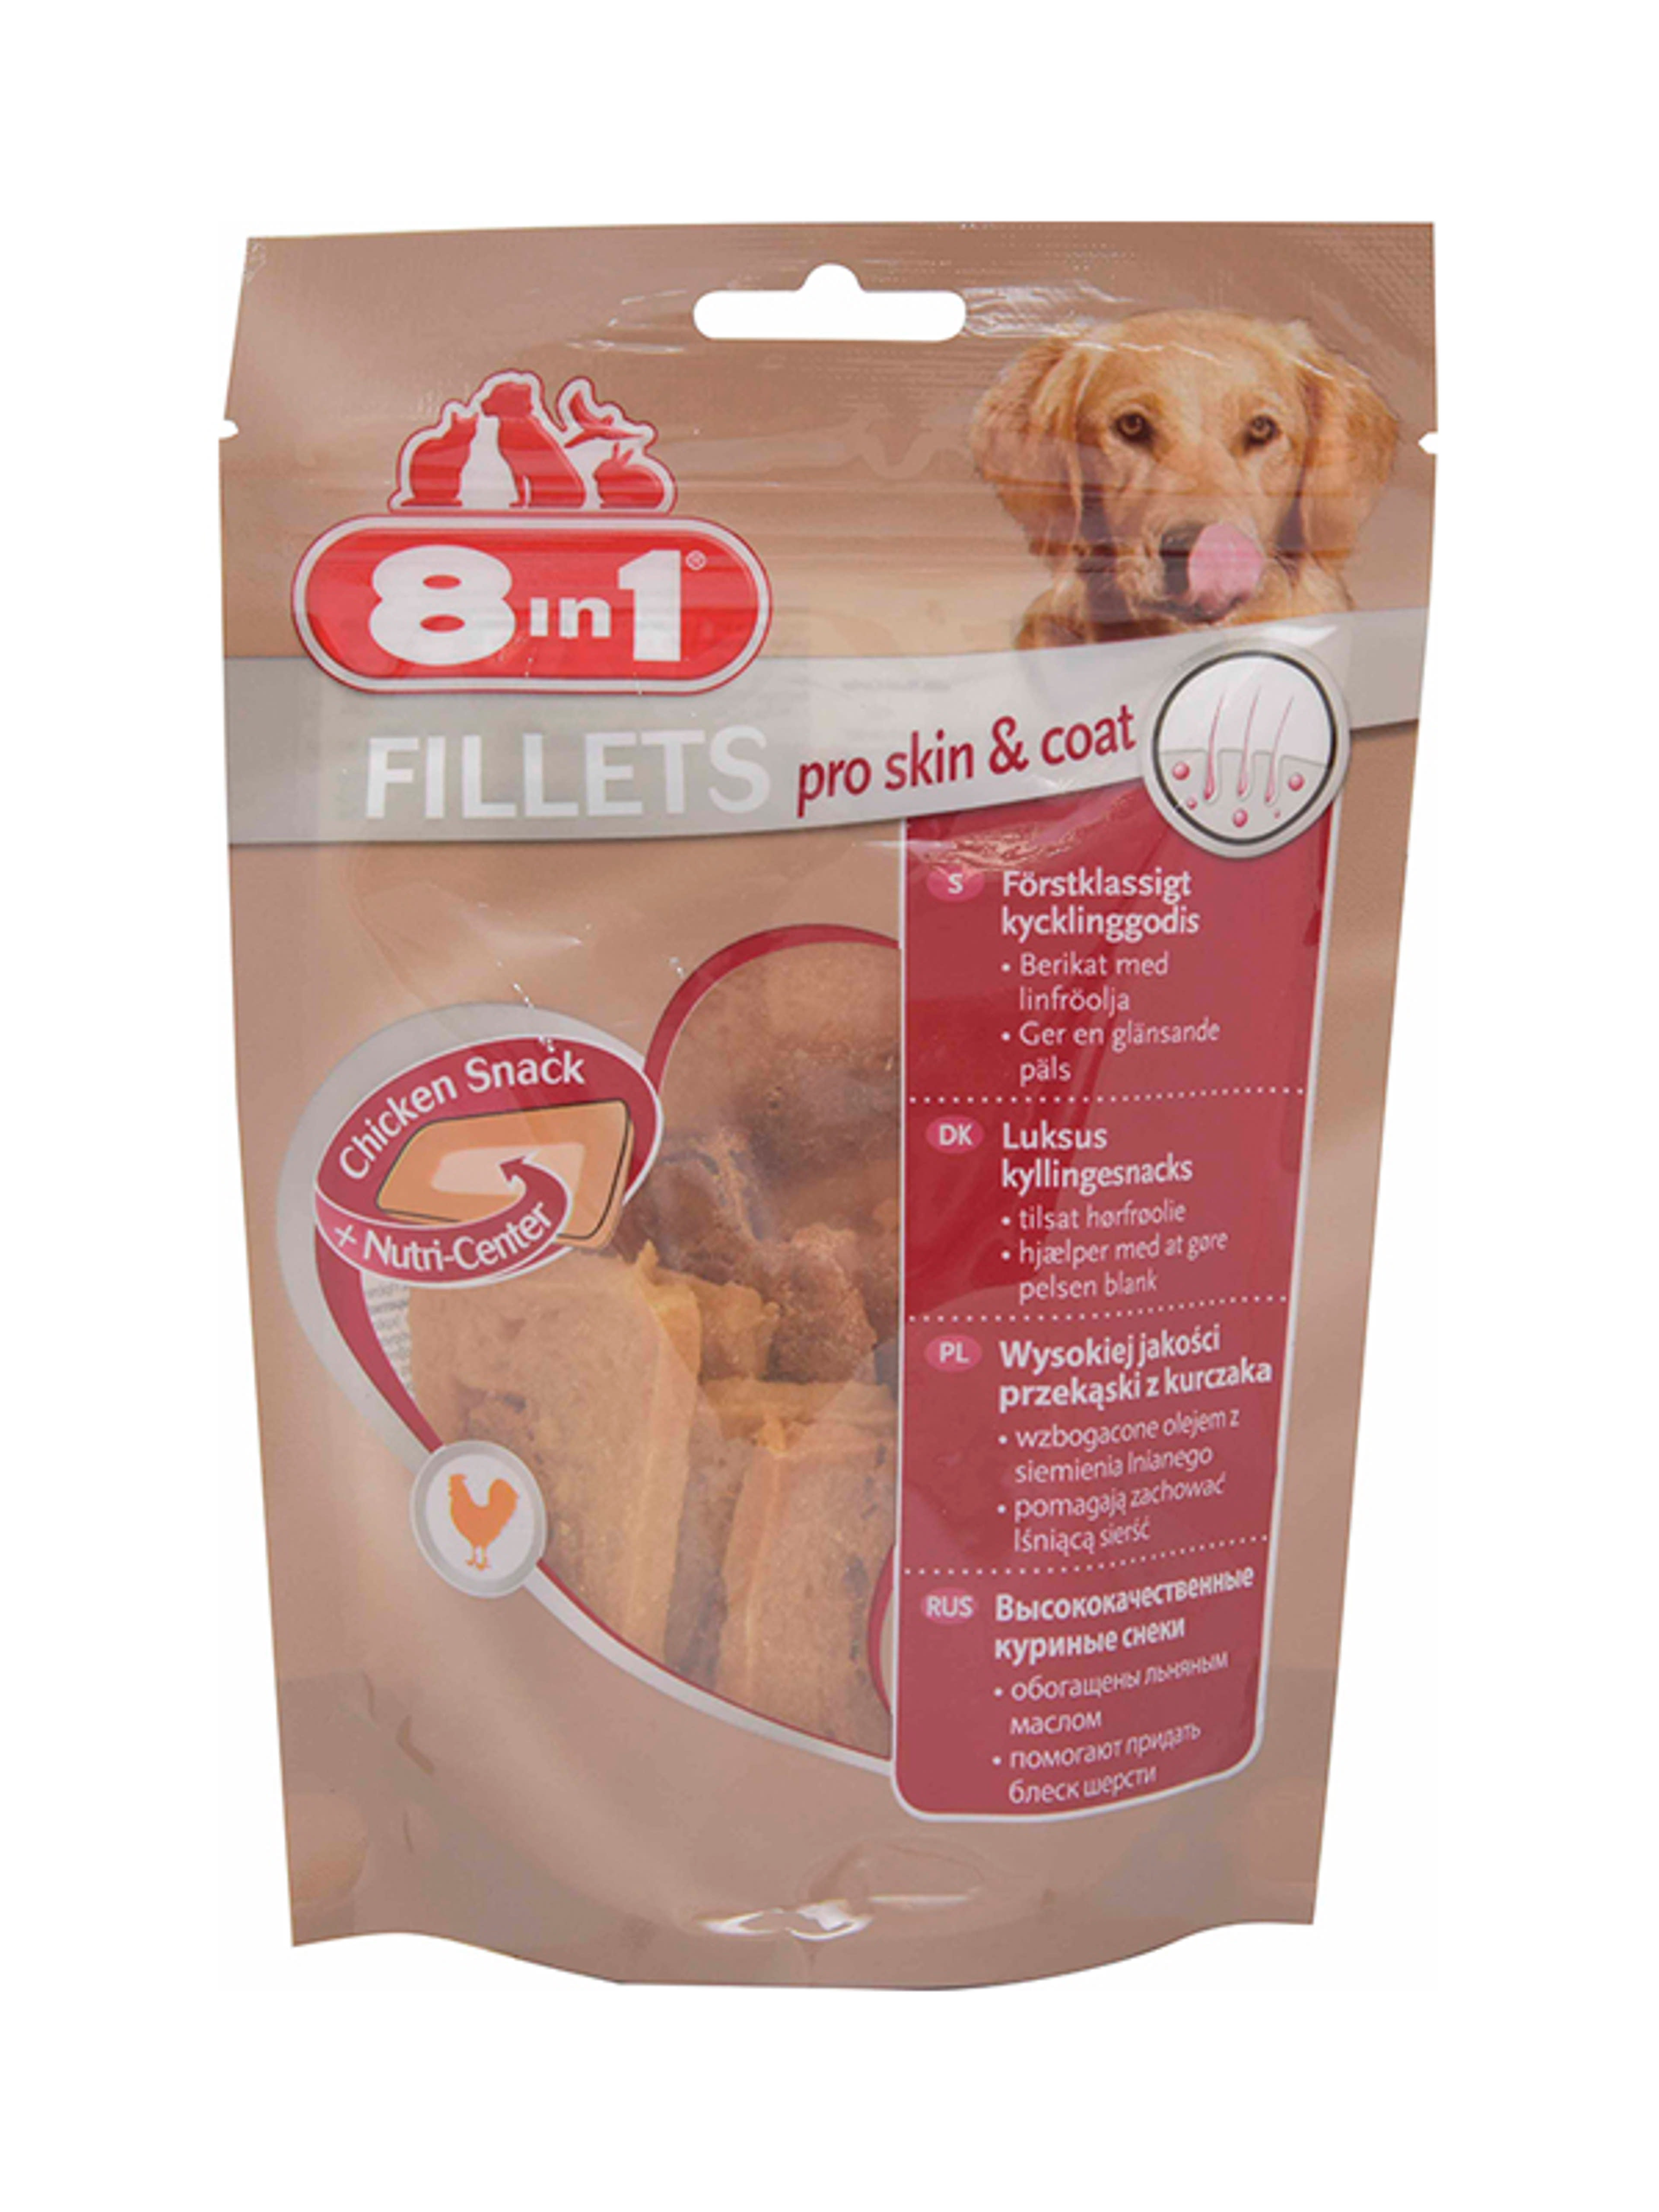 8in1 kutya jutifalat pro skin fillets - 80 g